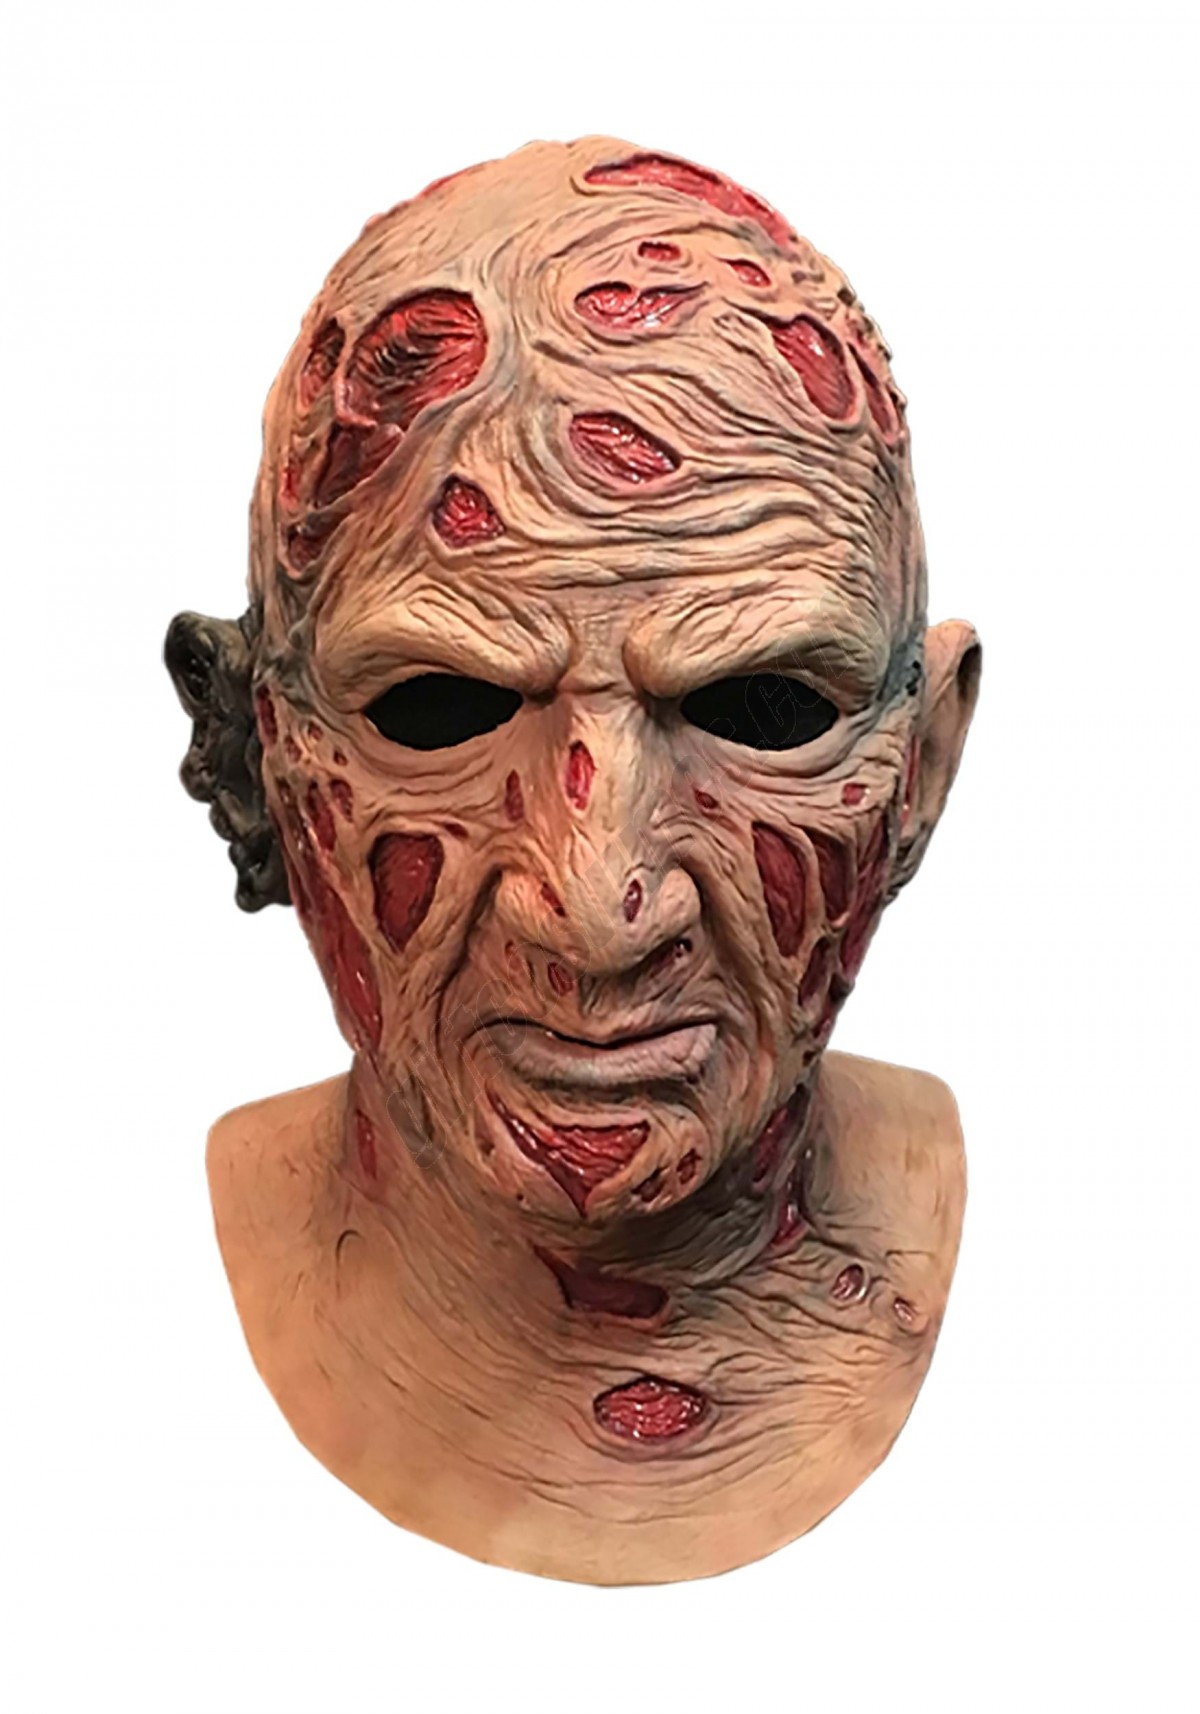 Springwood Slasher Mask from A Nightmare on Elm Street  Promotions - -0